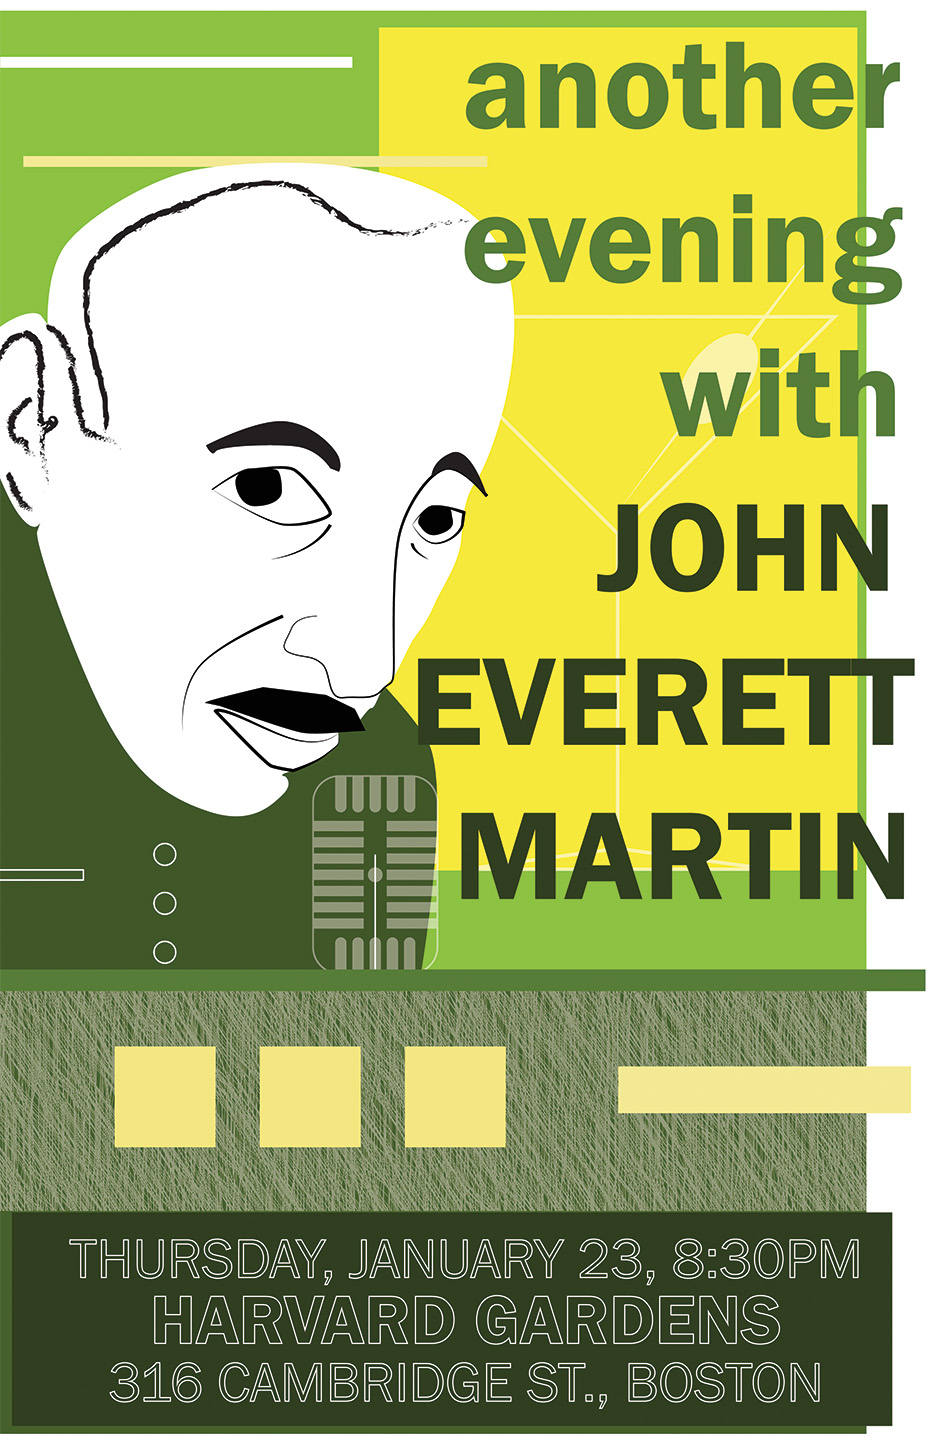 Another Evening with John Everett Martin